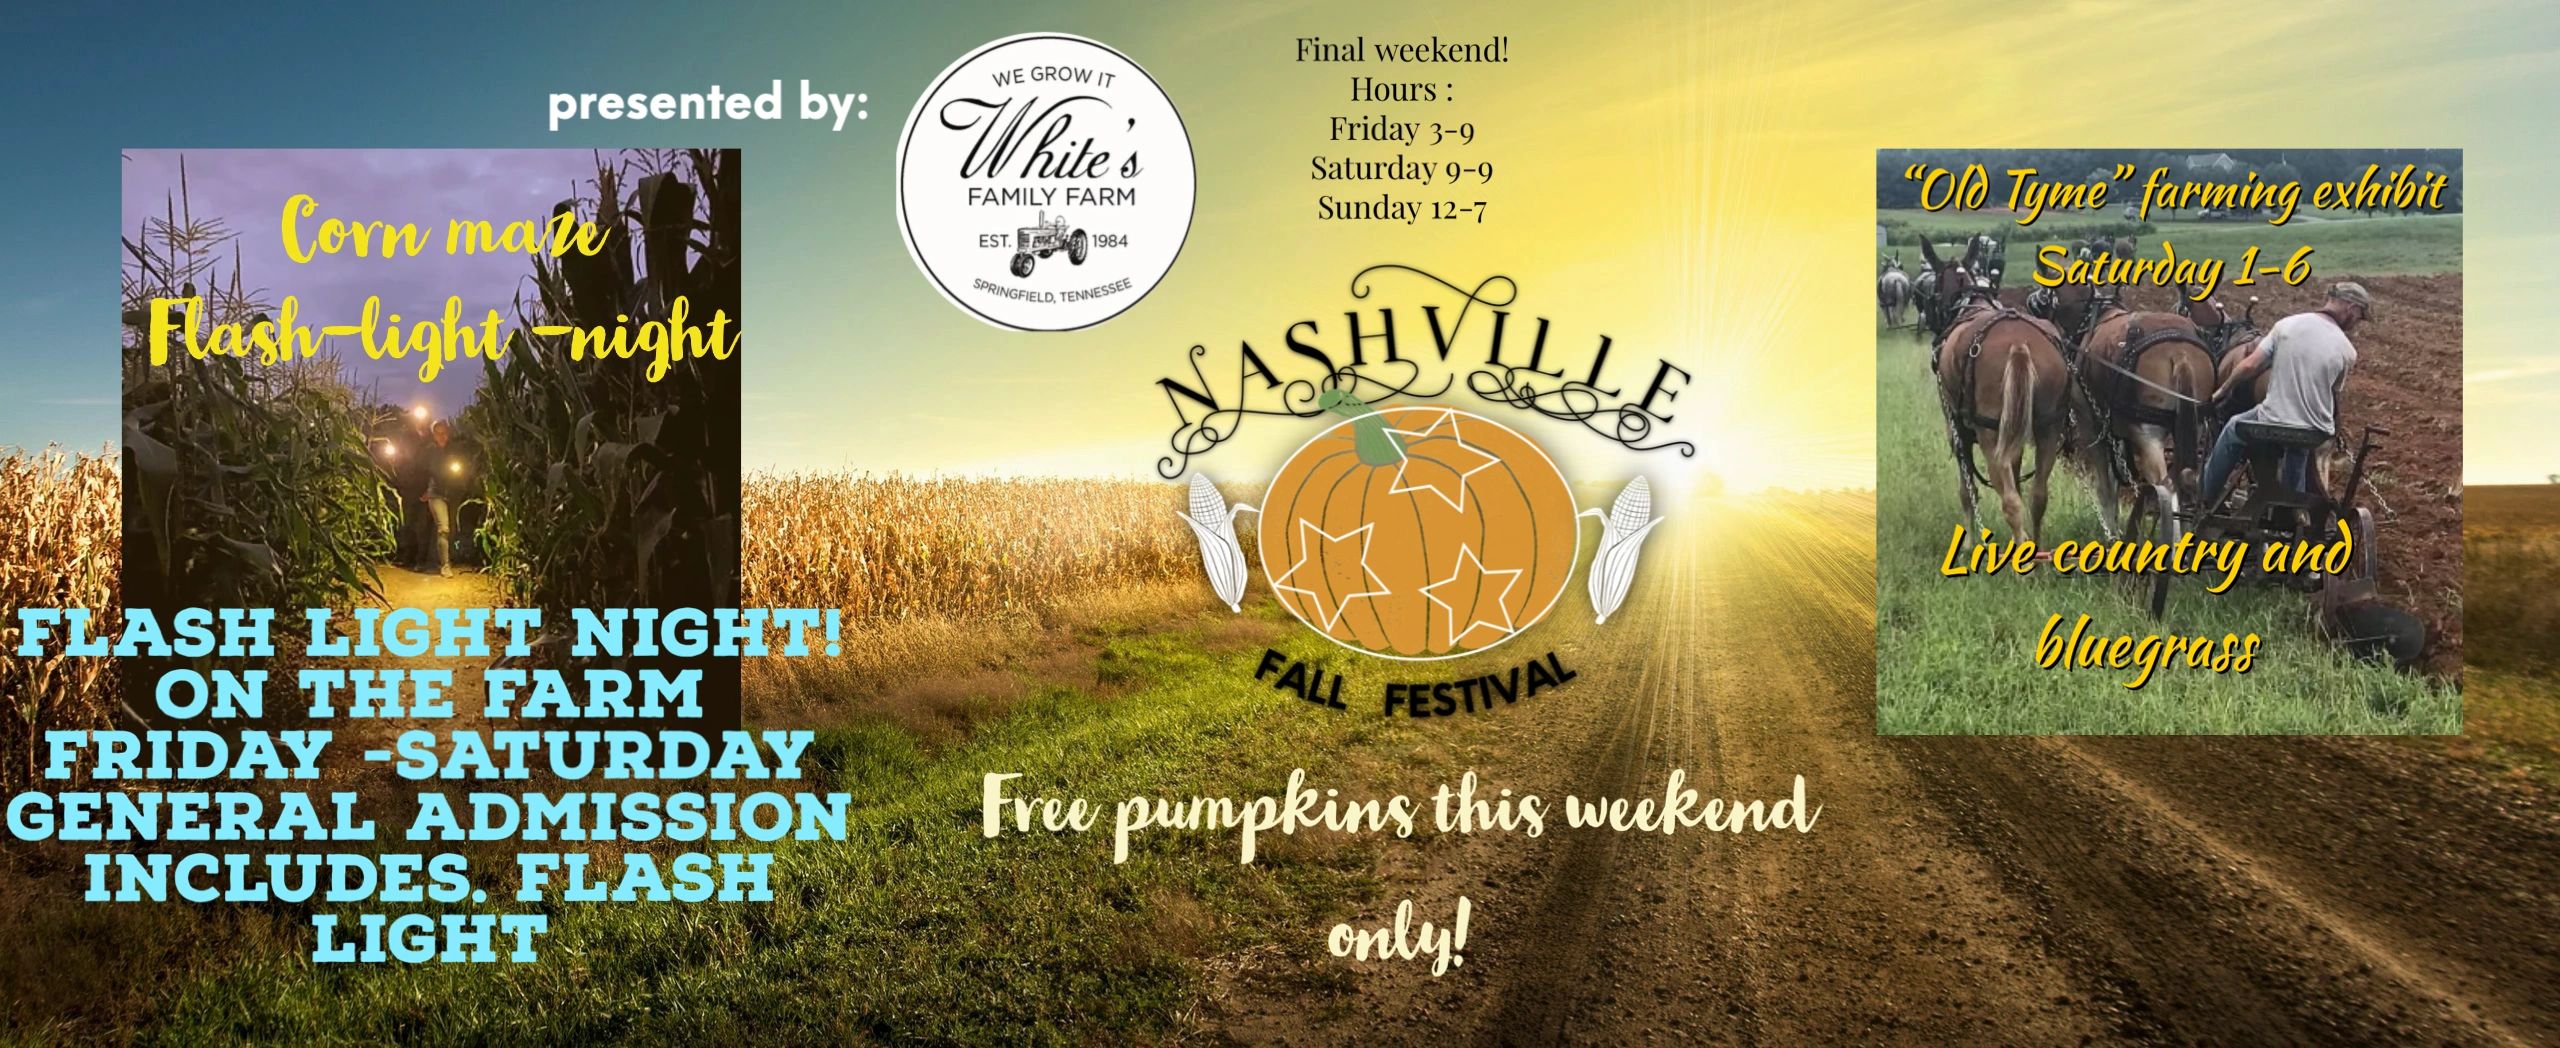 Nashville Fall Festival Cornmaze, Festival, Pumpkin Picking